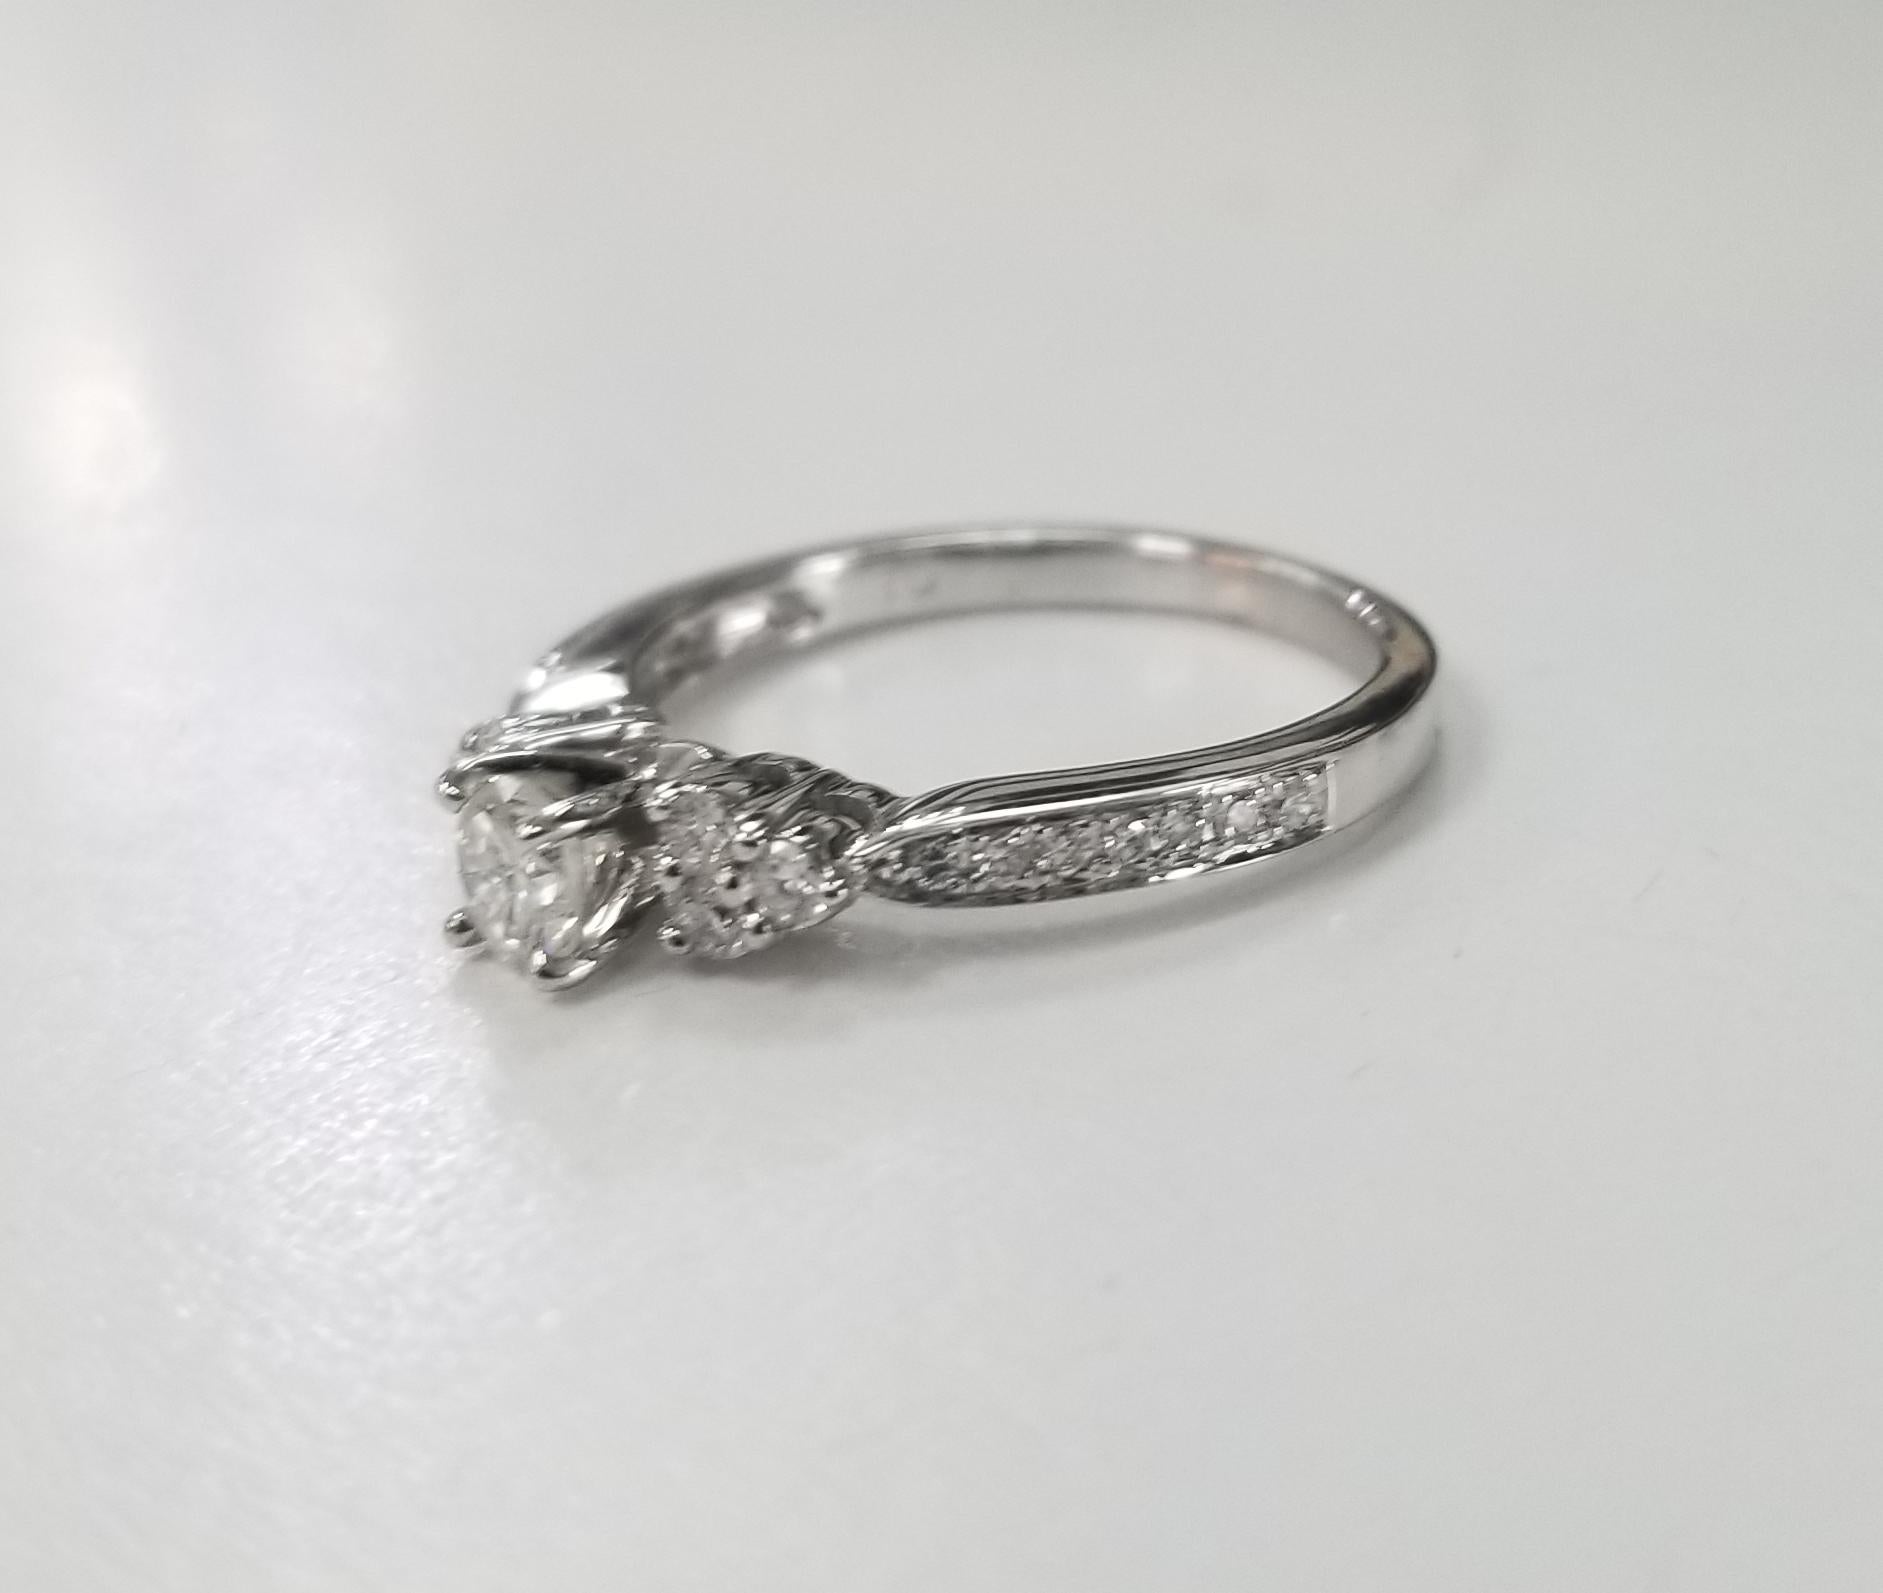 14k white gold ladies diamond engagement ring, containing 1 brilliant cut diamond; color 